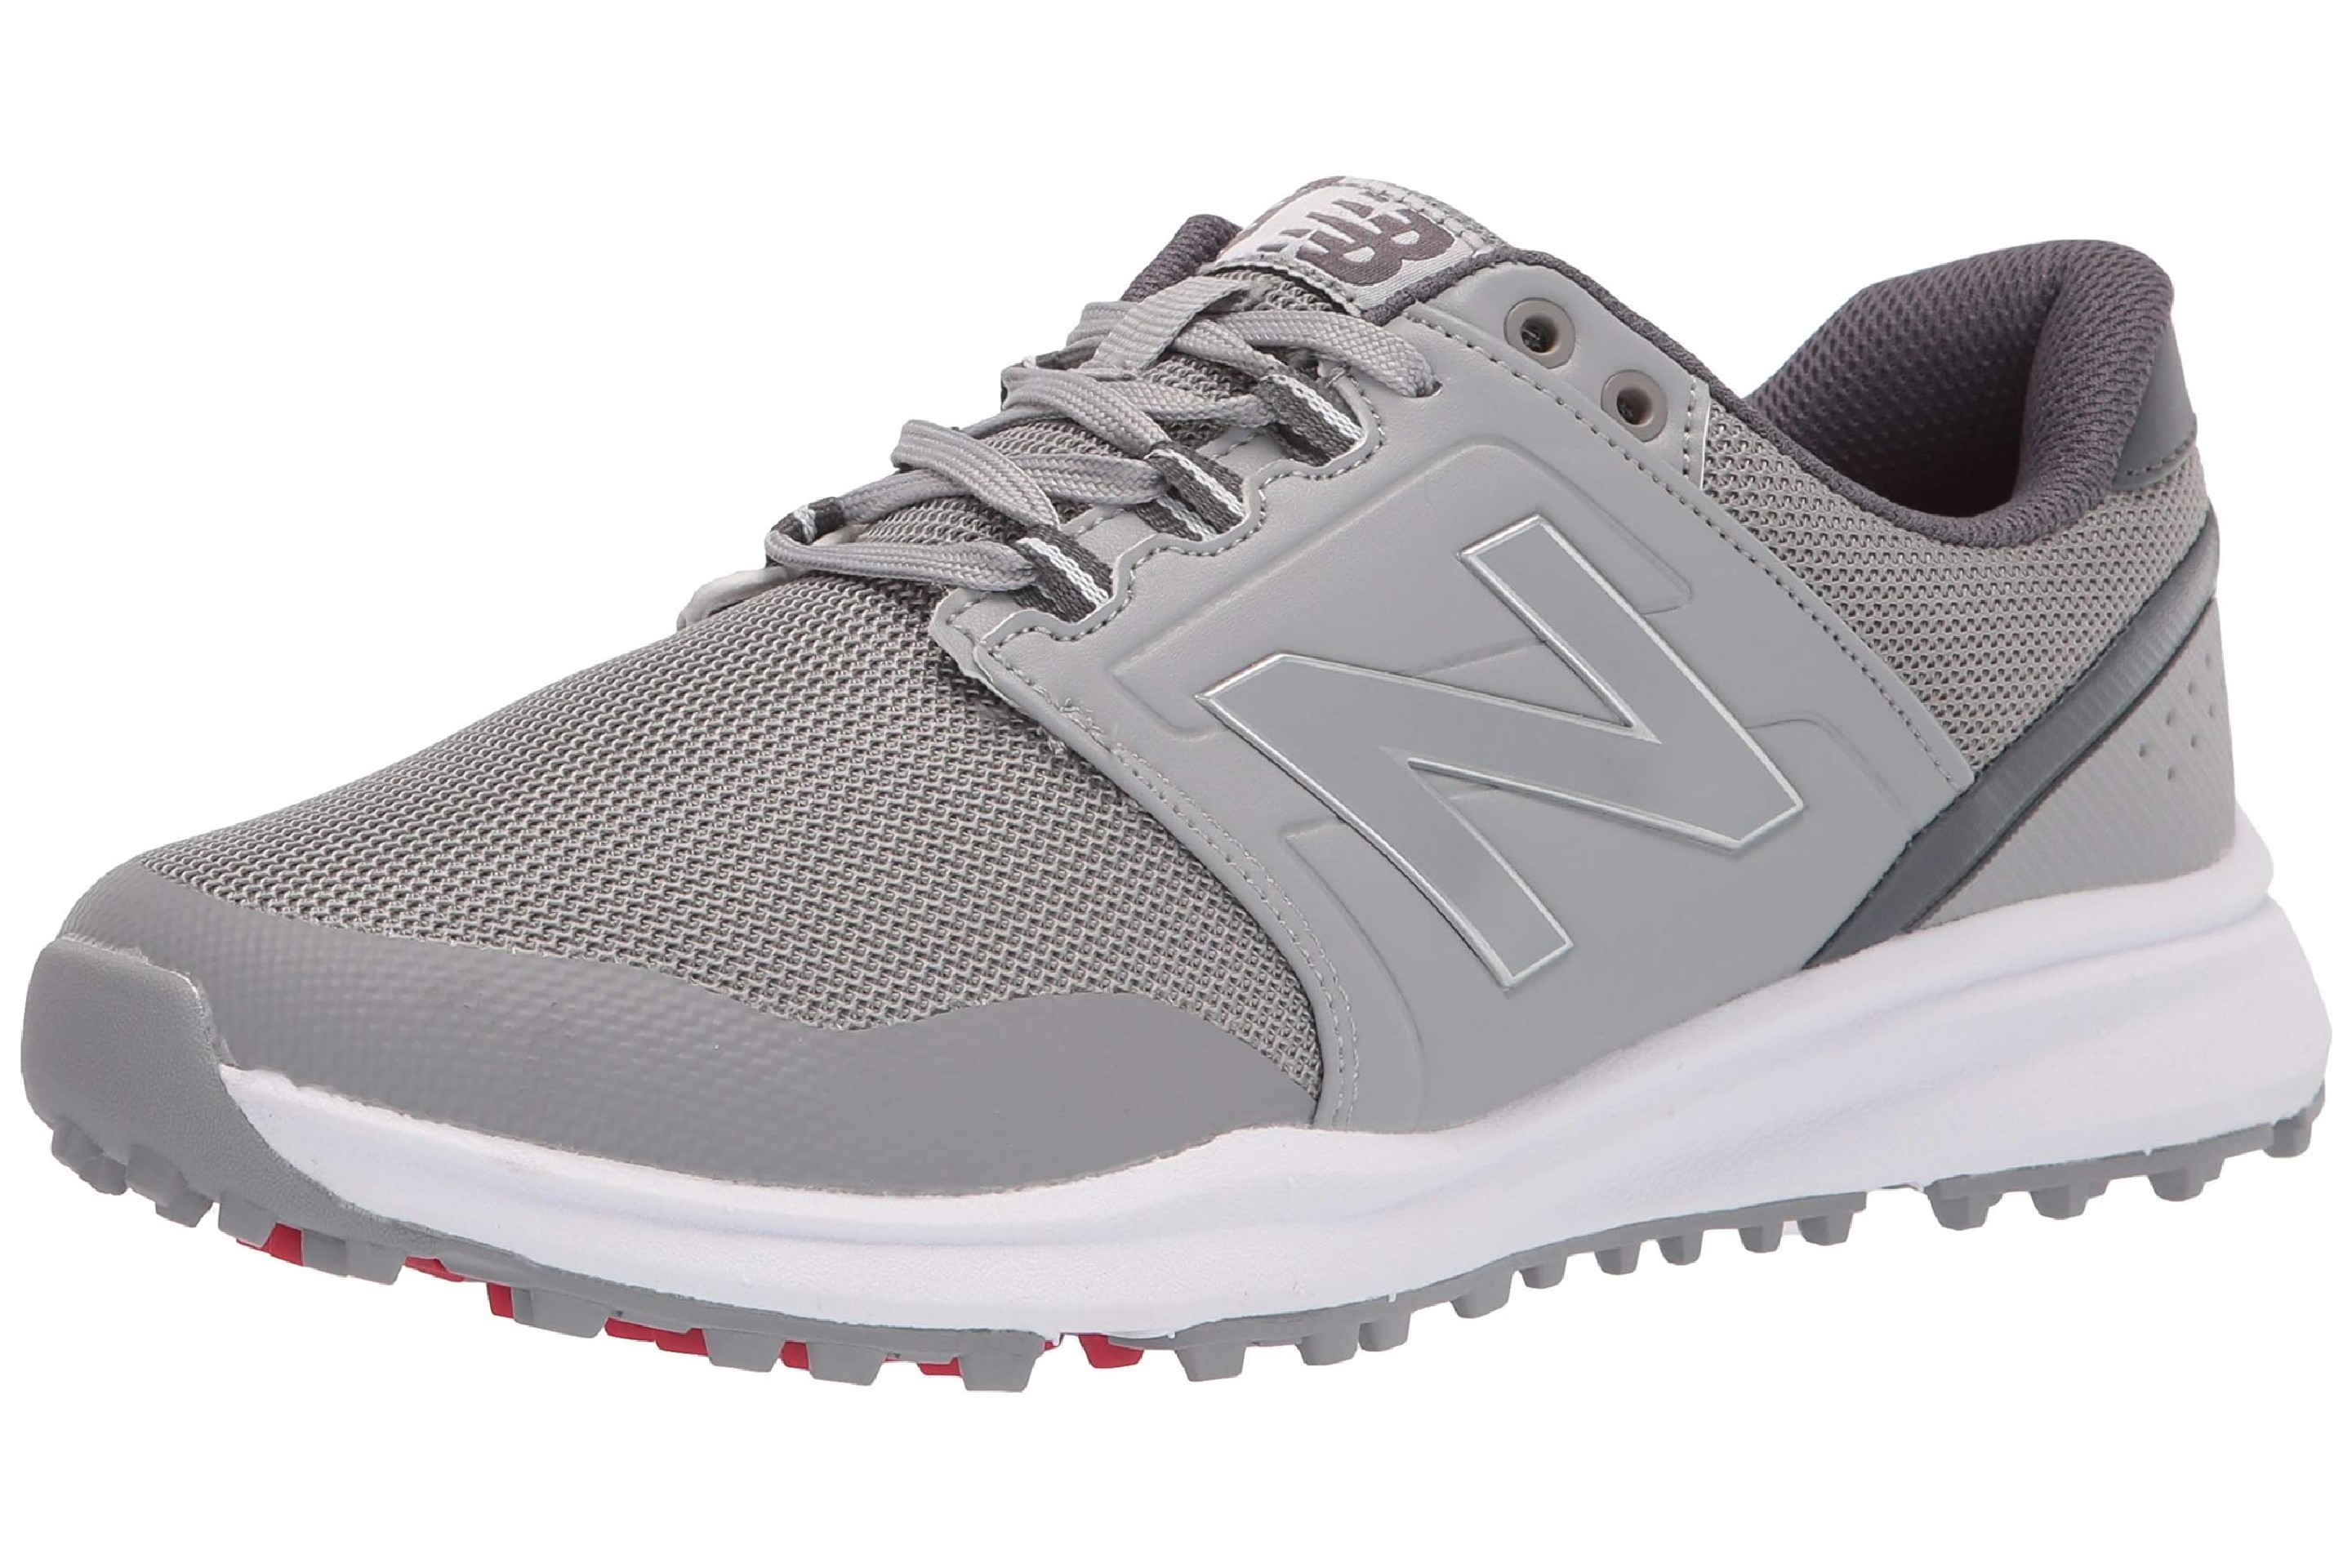 New Balance Men's Breeze V2 Golf Shoes